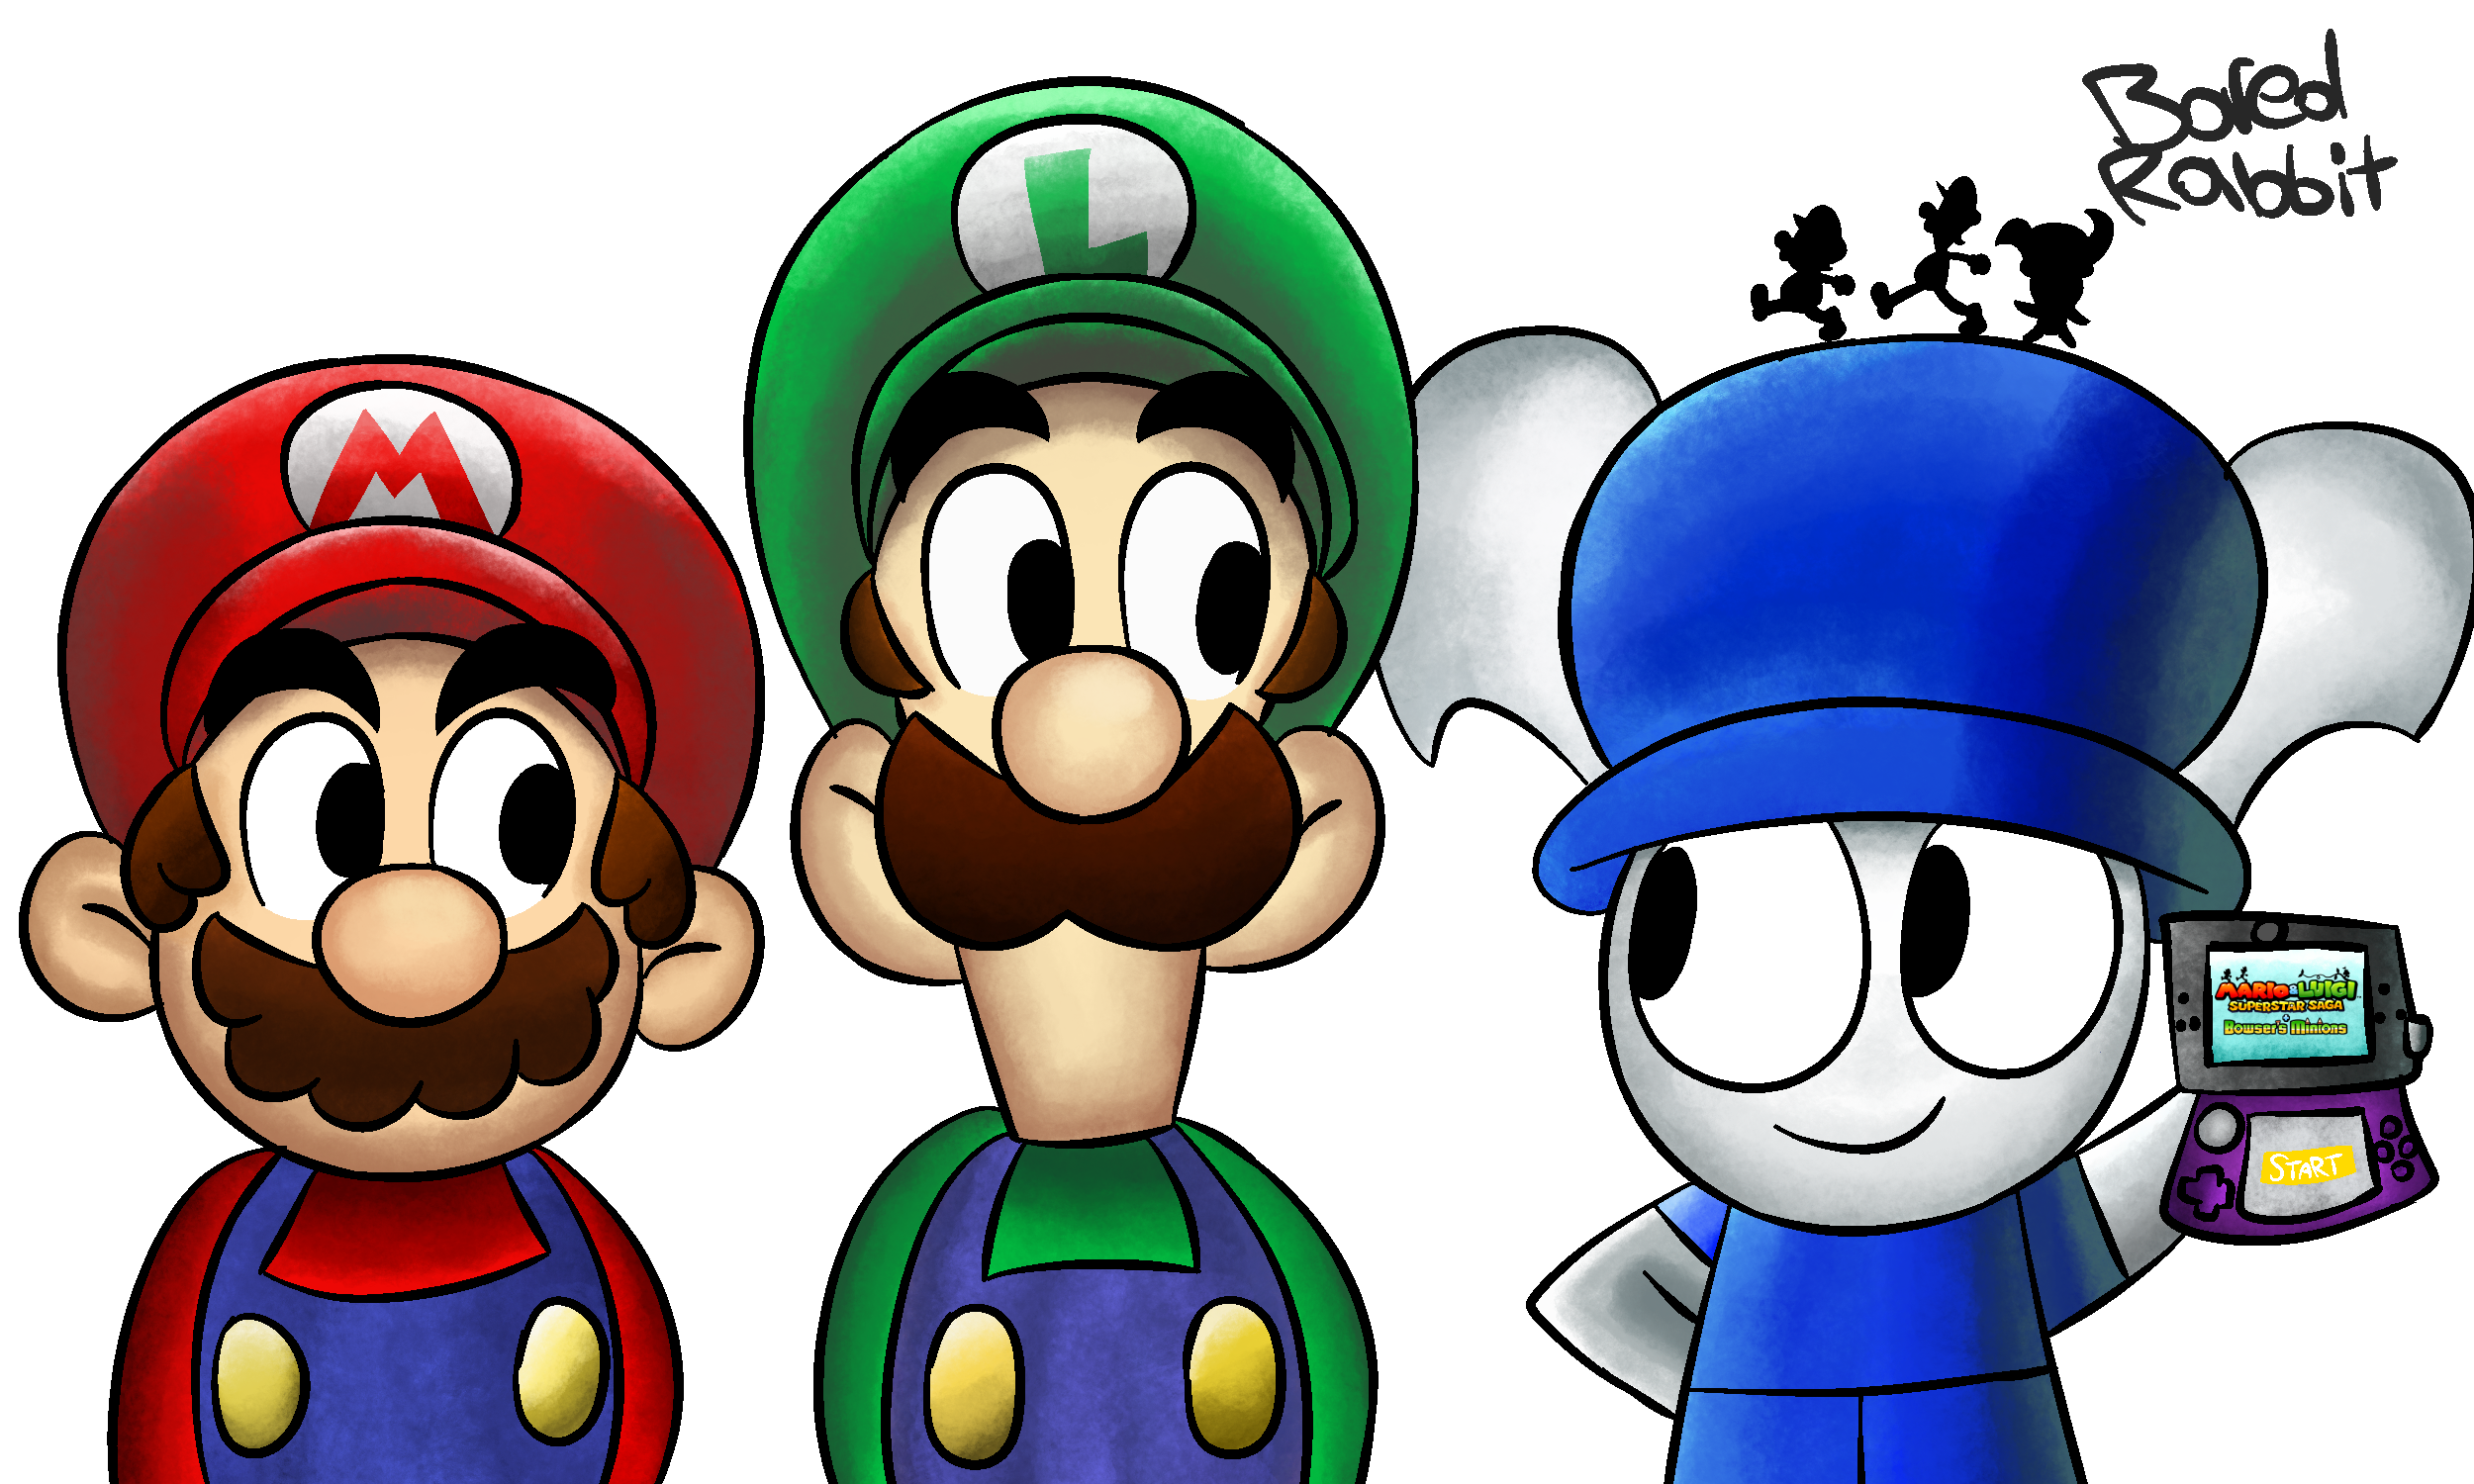 Detail Images Of Mario And Luigi Nomer 32